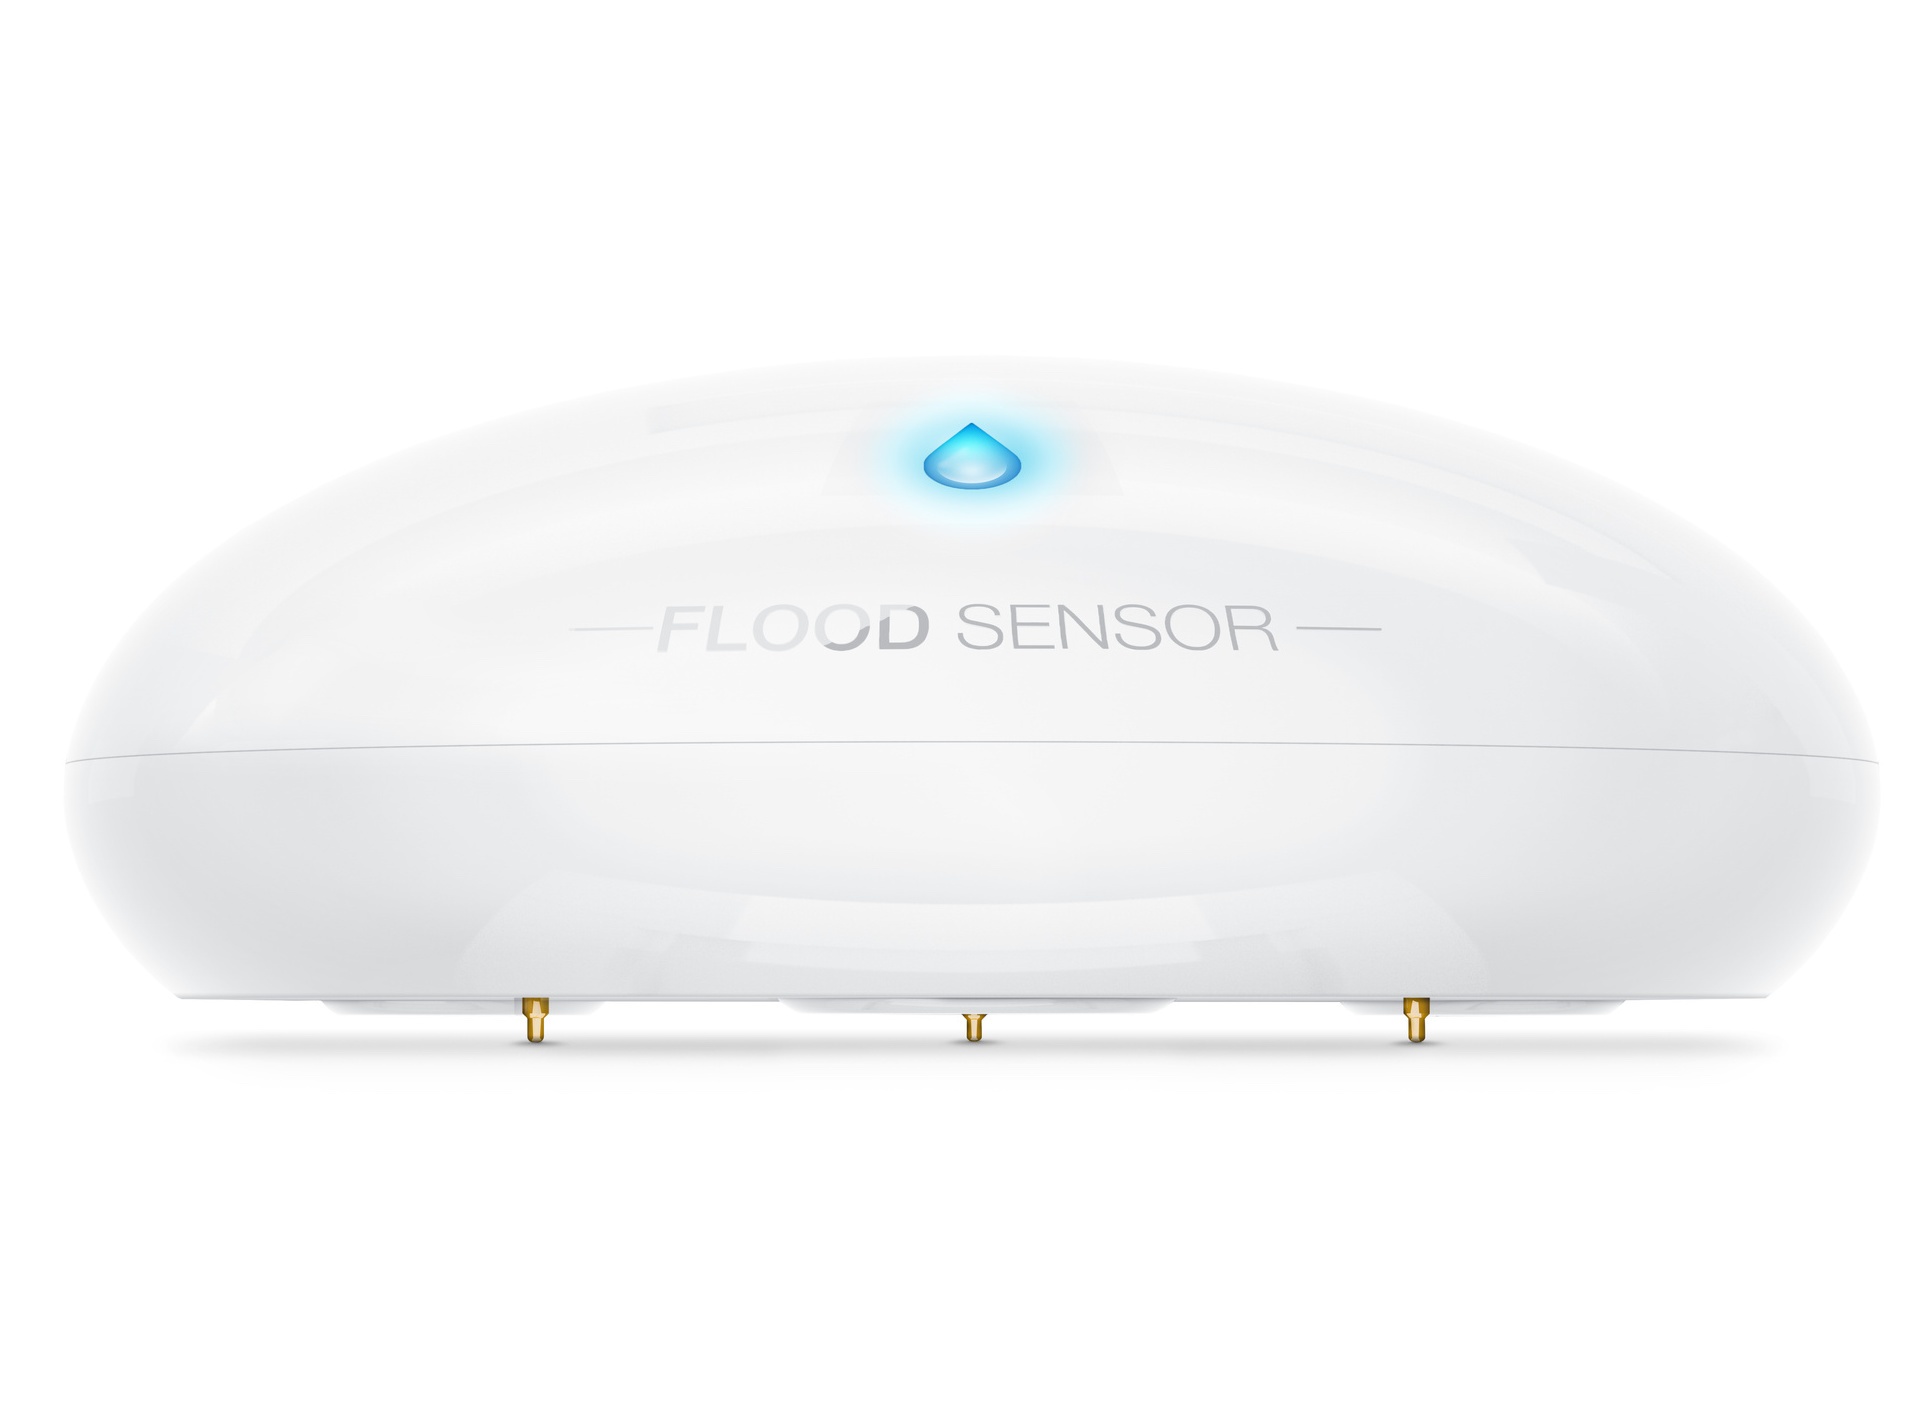 All’EXPO 2020 Fibaro presenta Flood Sensor